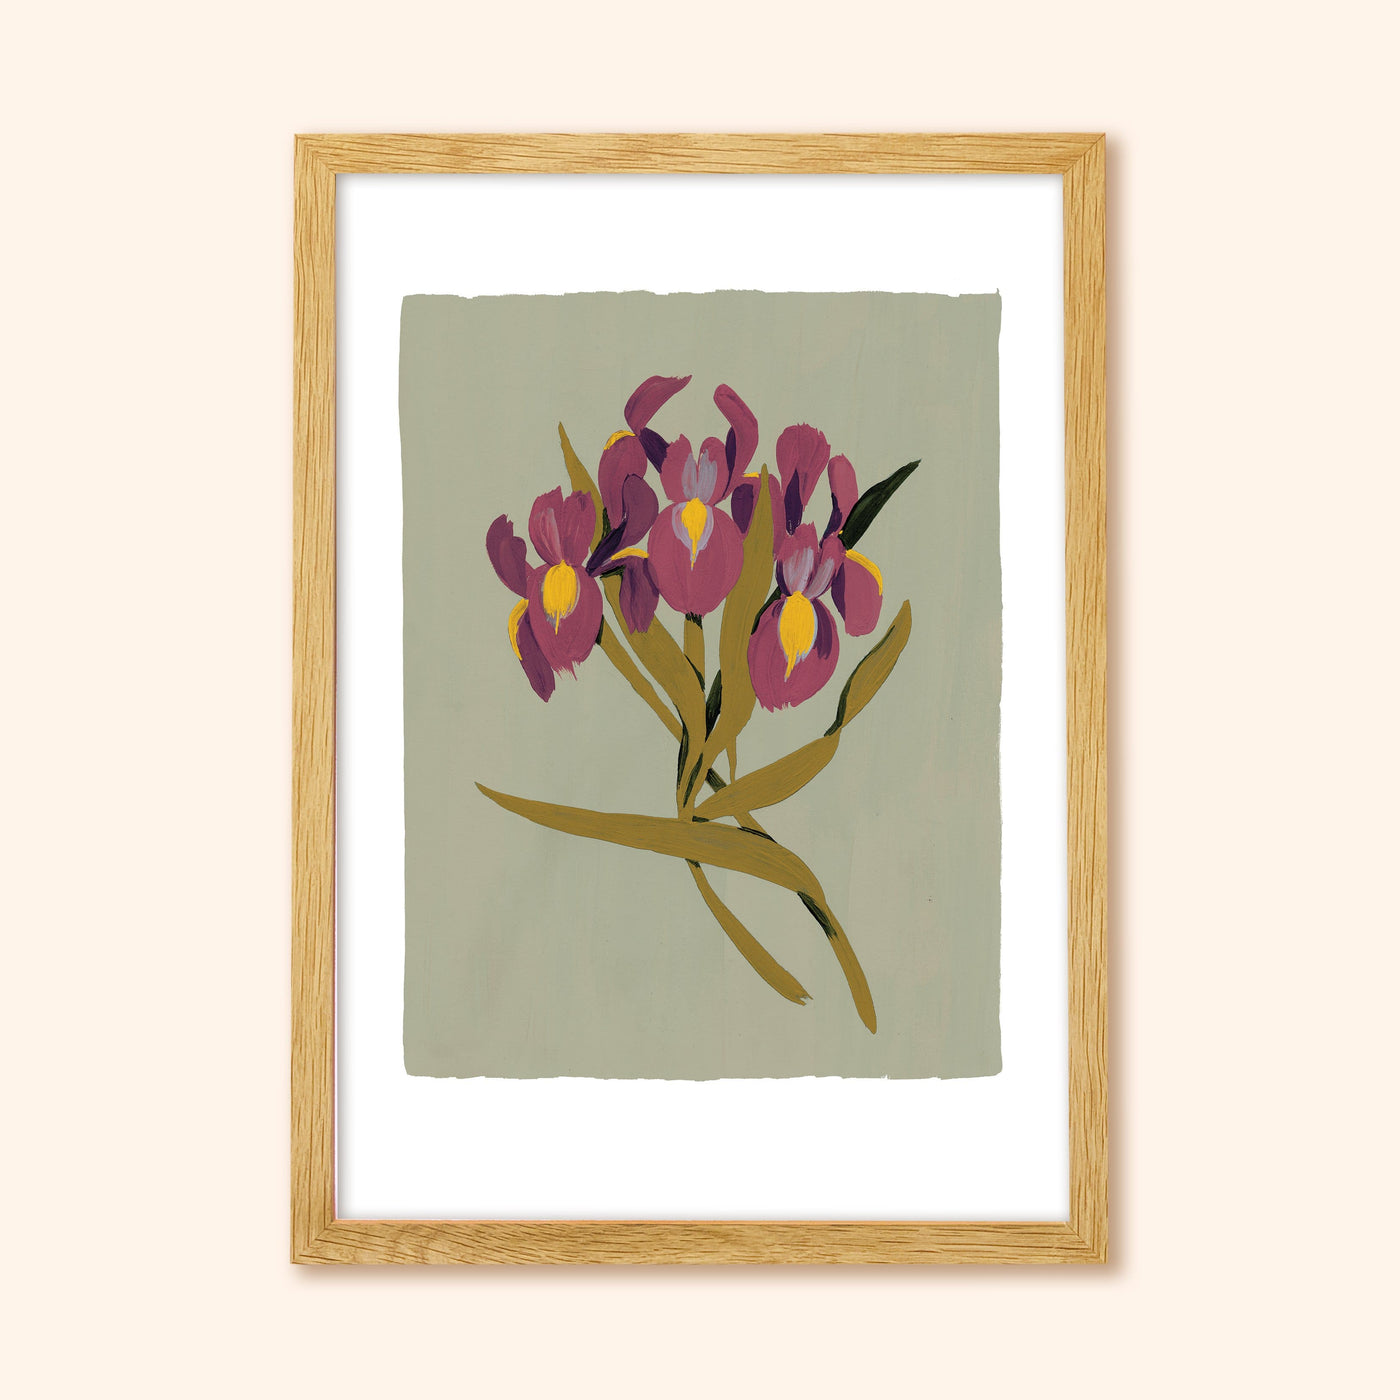 A Botanical Green Floral Print With Purple Iris's In Oak Frame - Annie Dornan Smith